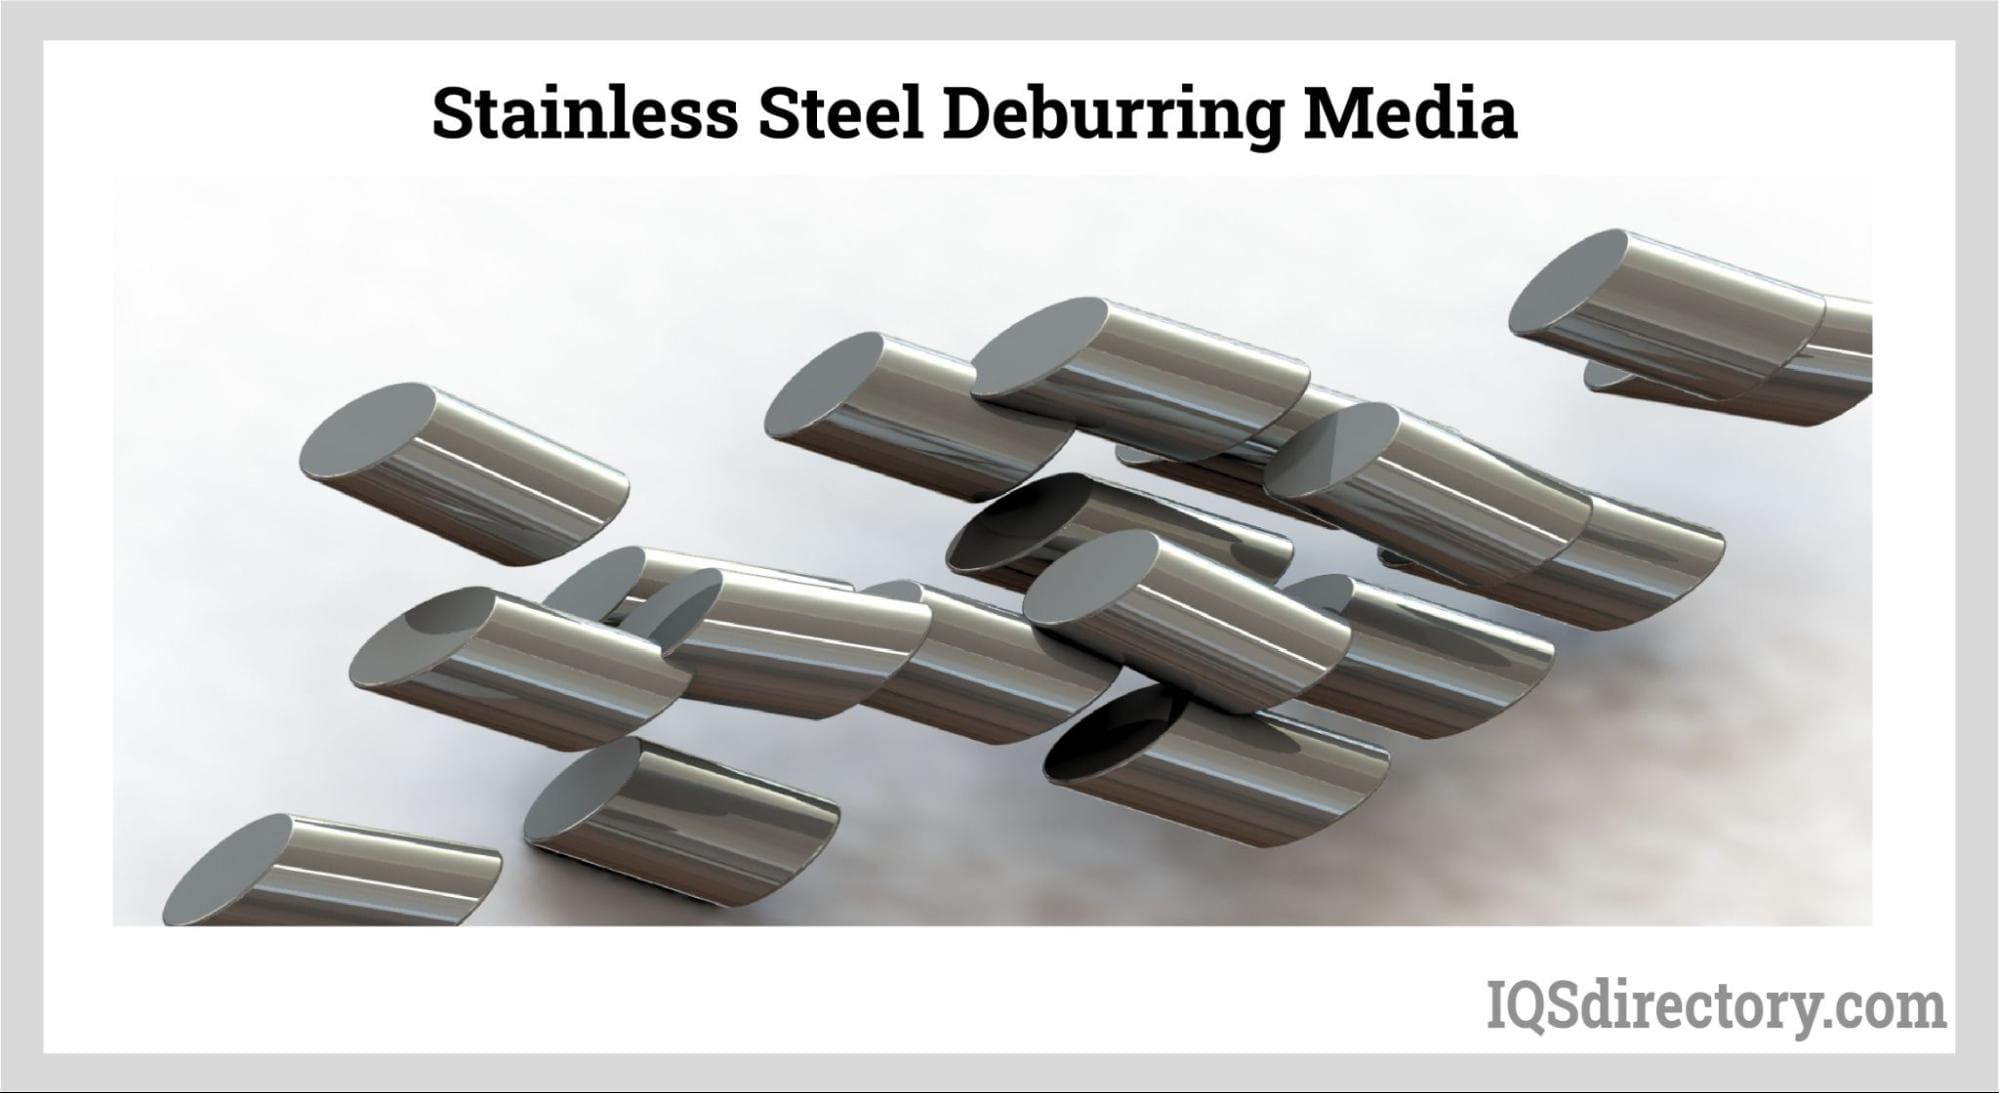 Stainless Steel Deburring Media